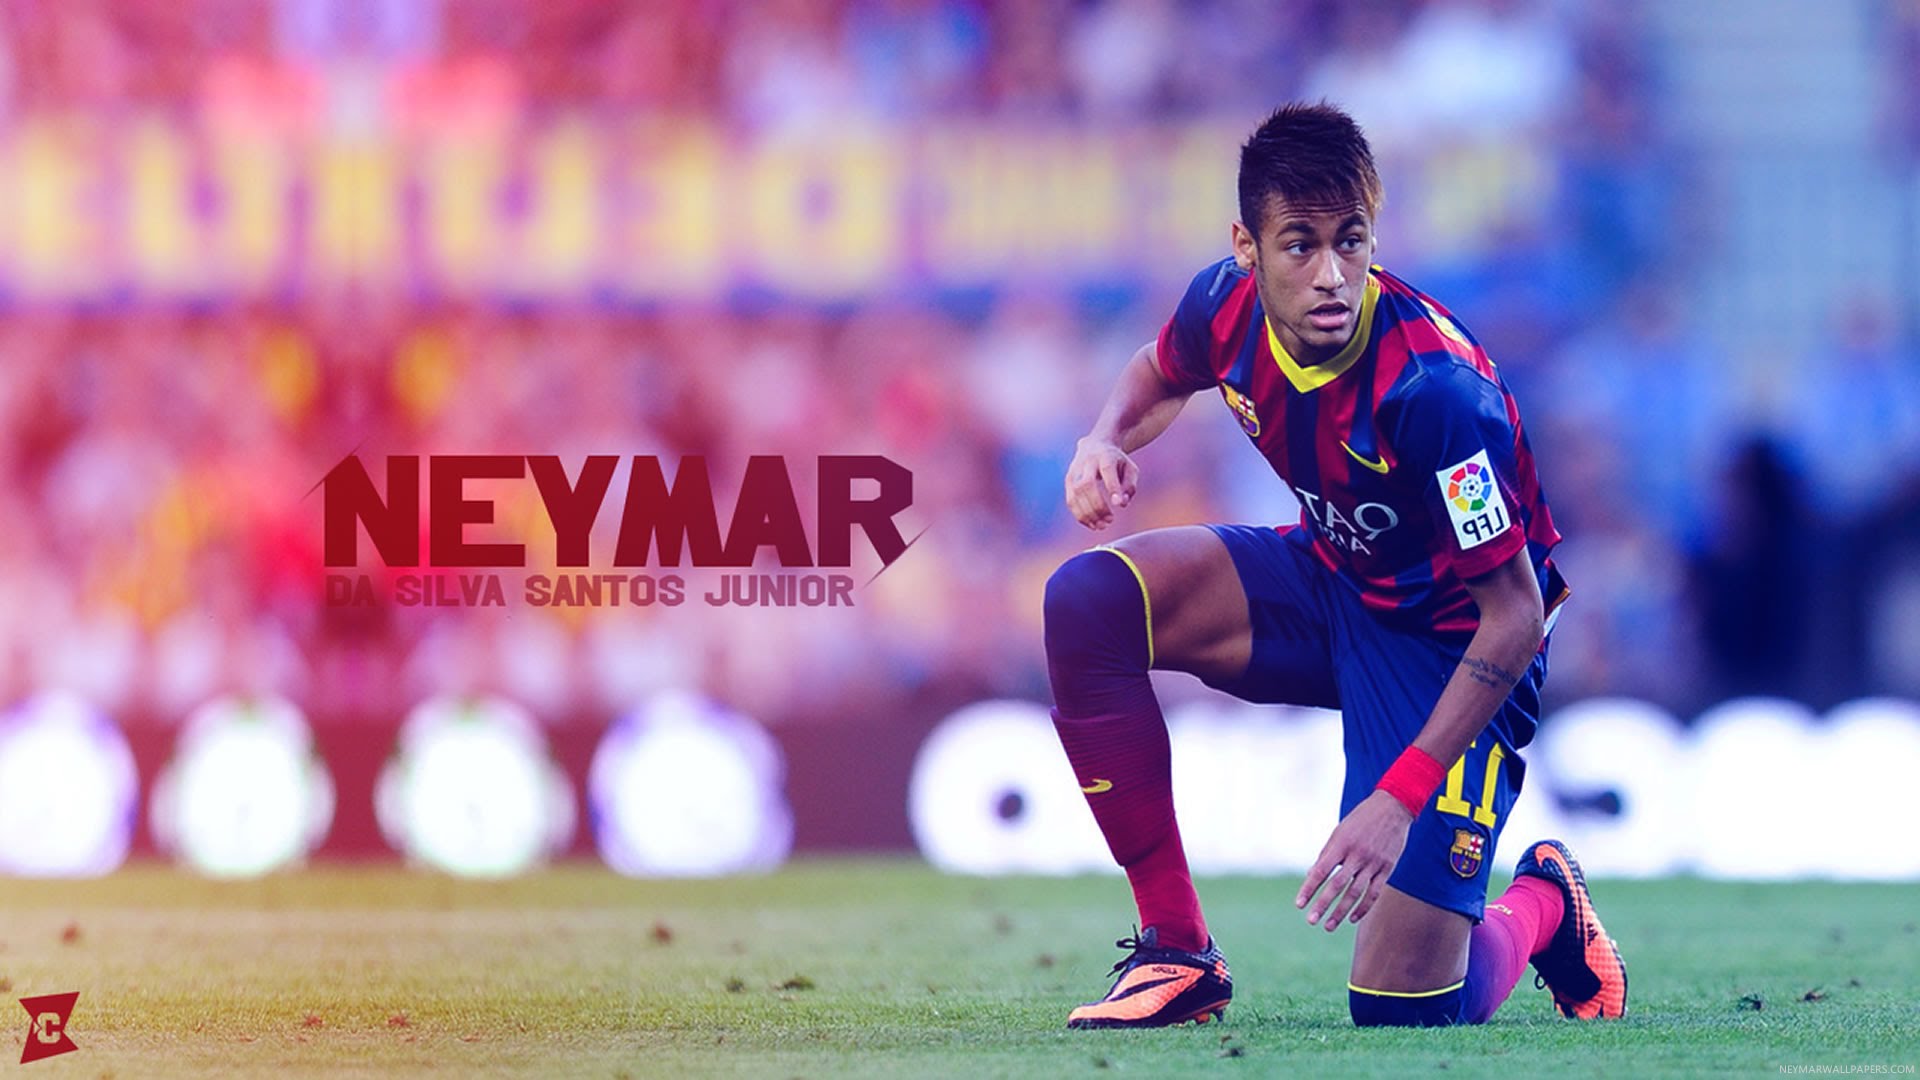 [48+] Neymar Jr Wallpaper 2015 1080p on WallpaperSafari